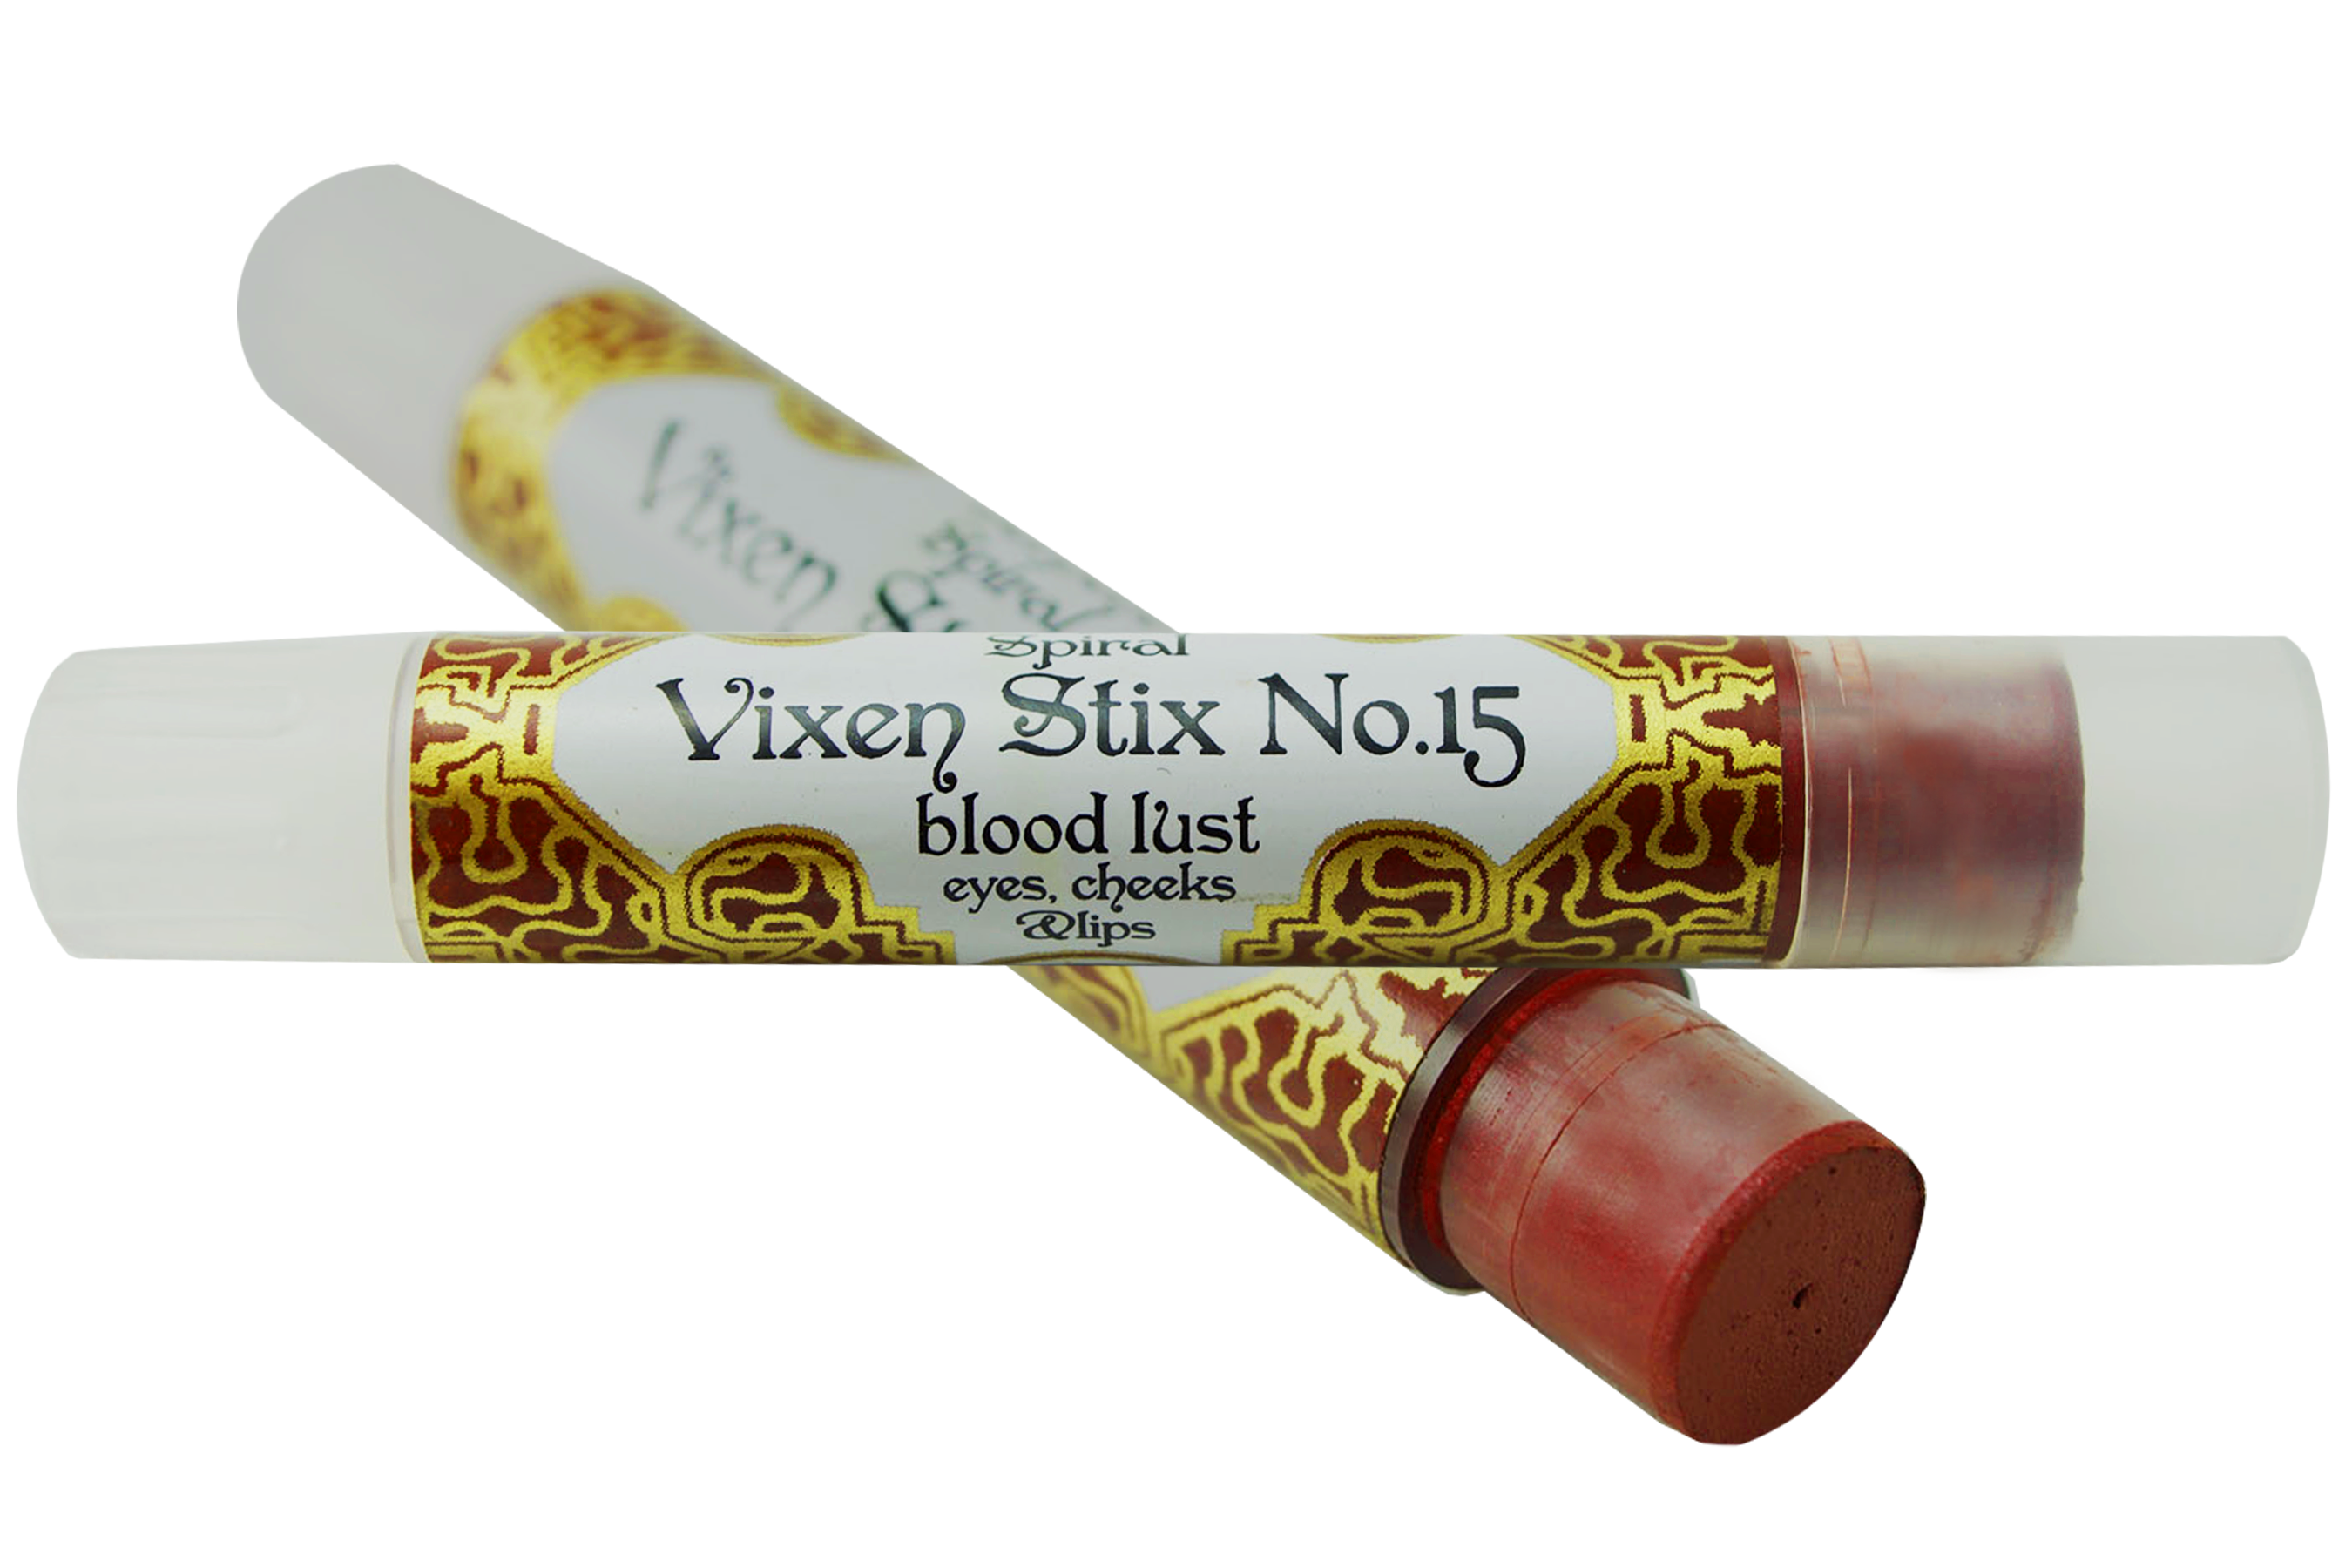 Vixen Stix No.15 ~ blood lust organic lip stick